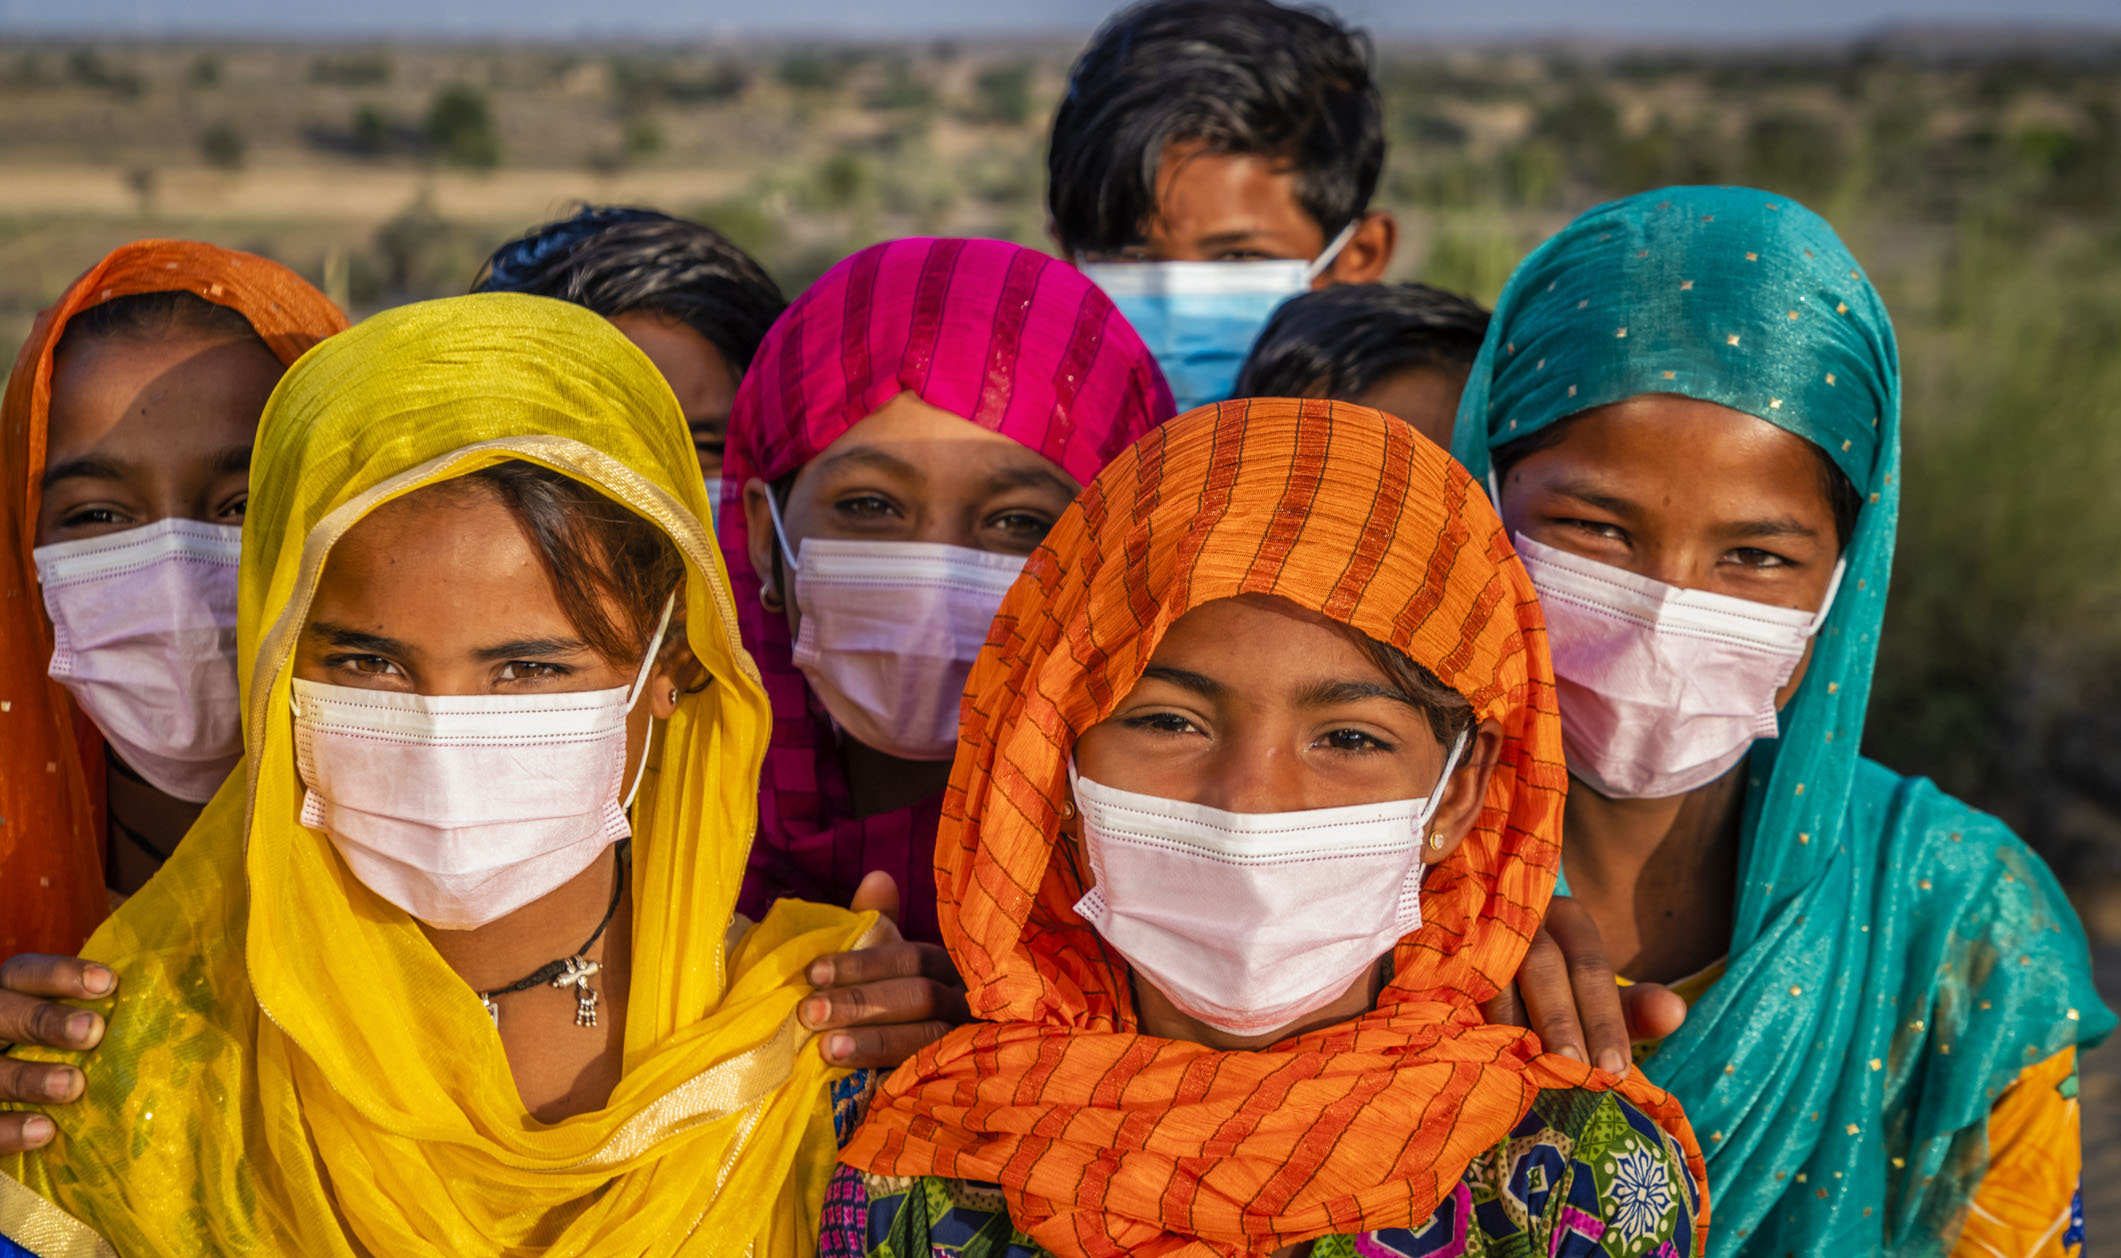 Group of children wearing face masks